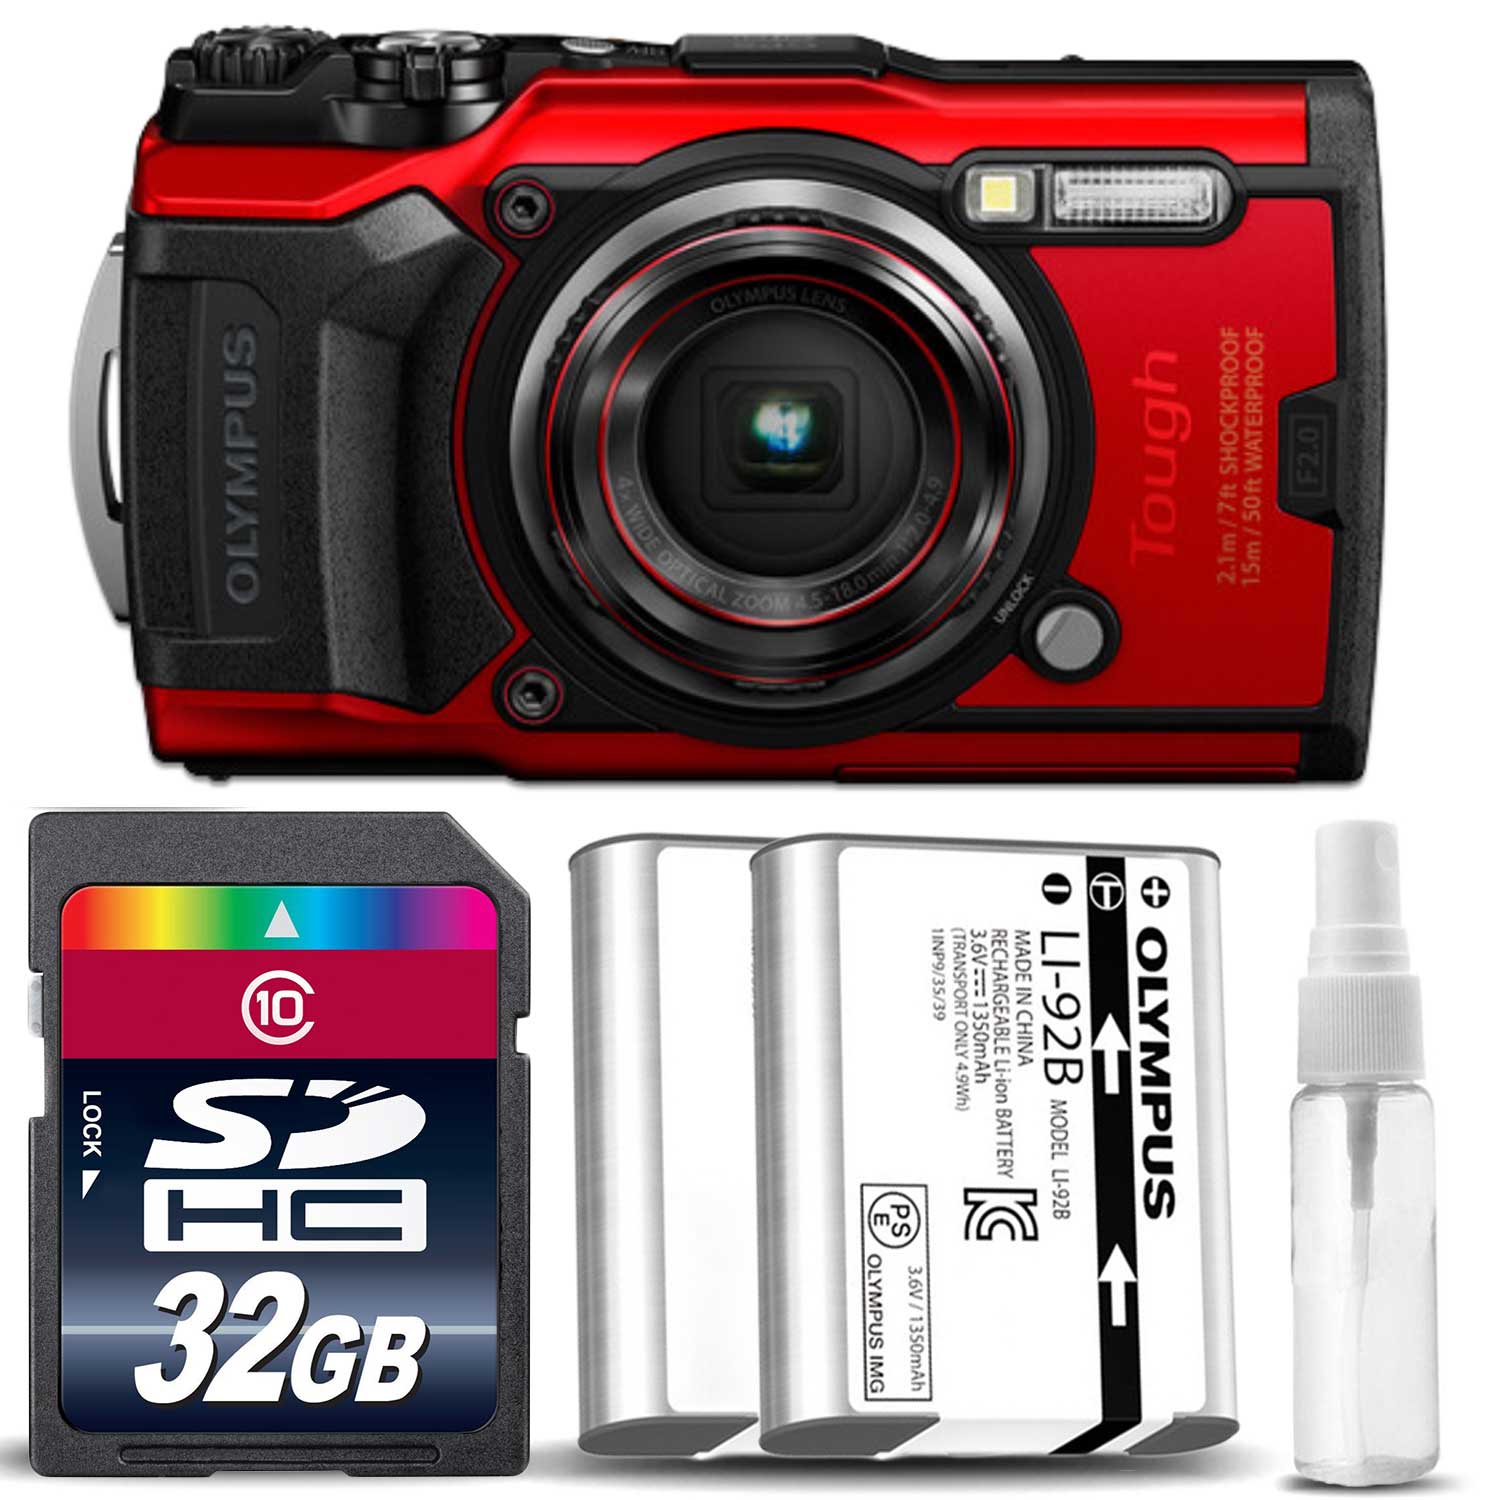 Stylus TOUGH TG-6 Digital Waterproof, WiFi Camera (Red) - 32GB BUNDLE *FREE SHIPPING*